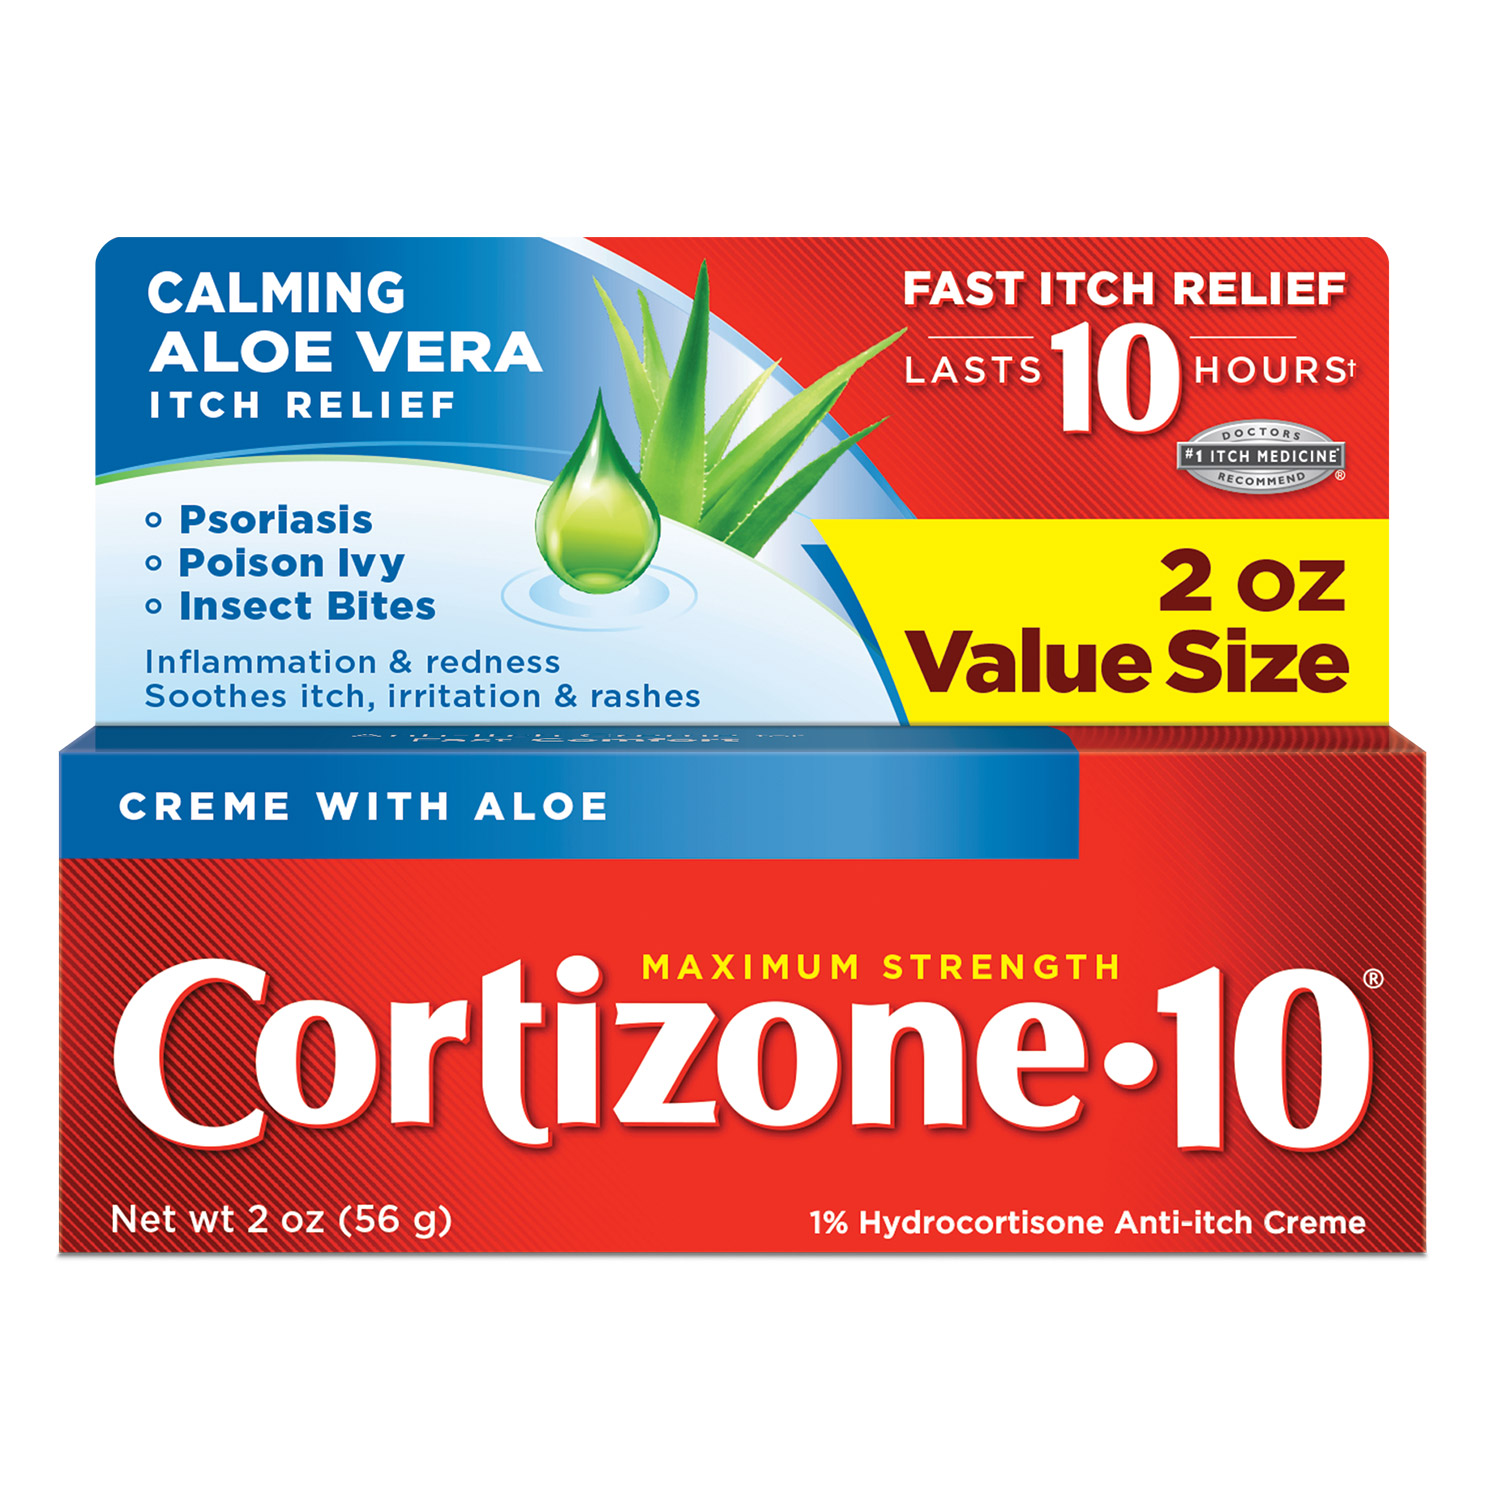 Cortizone 10 Maximum Strength, Anti Itch Crème (2 Oz) - image 1 of 7